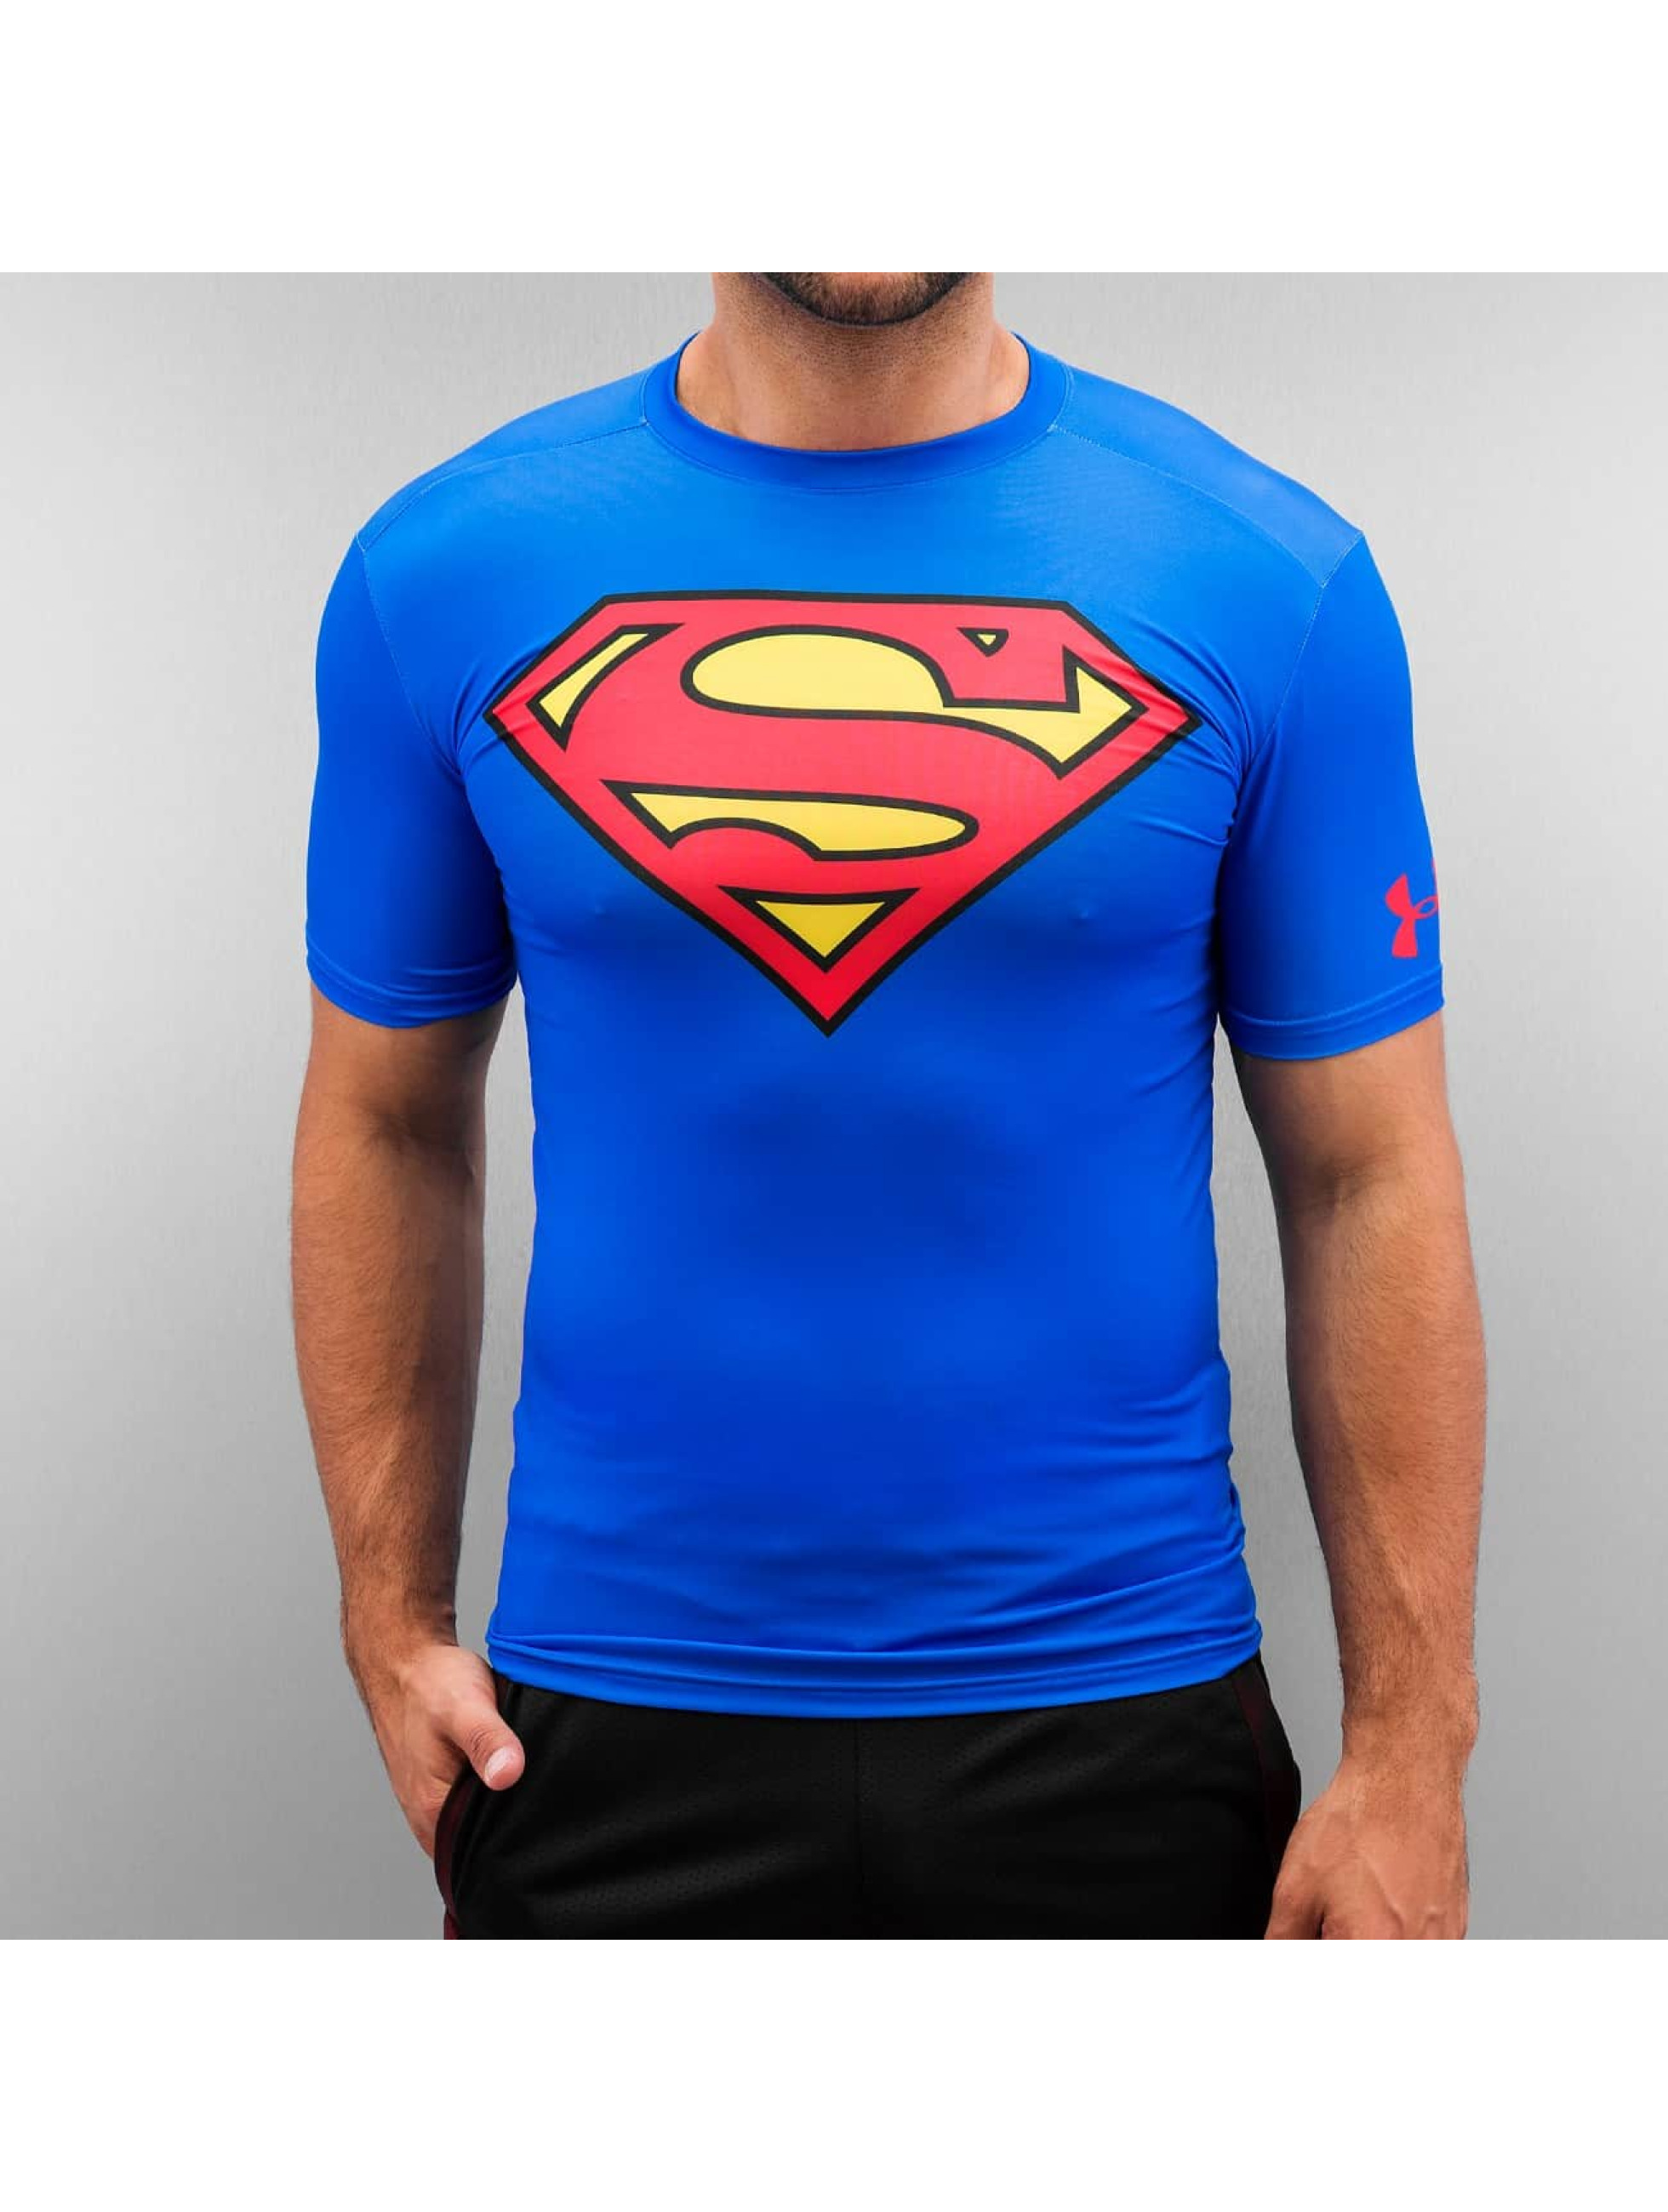 T-Shirt Under Armour Alter Ego Superman Compression en bleu